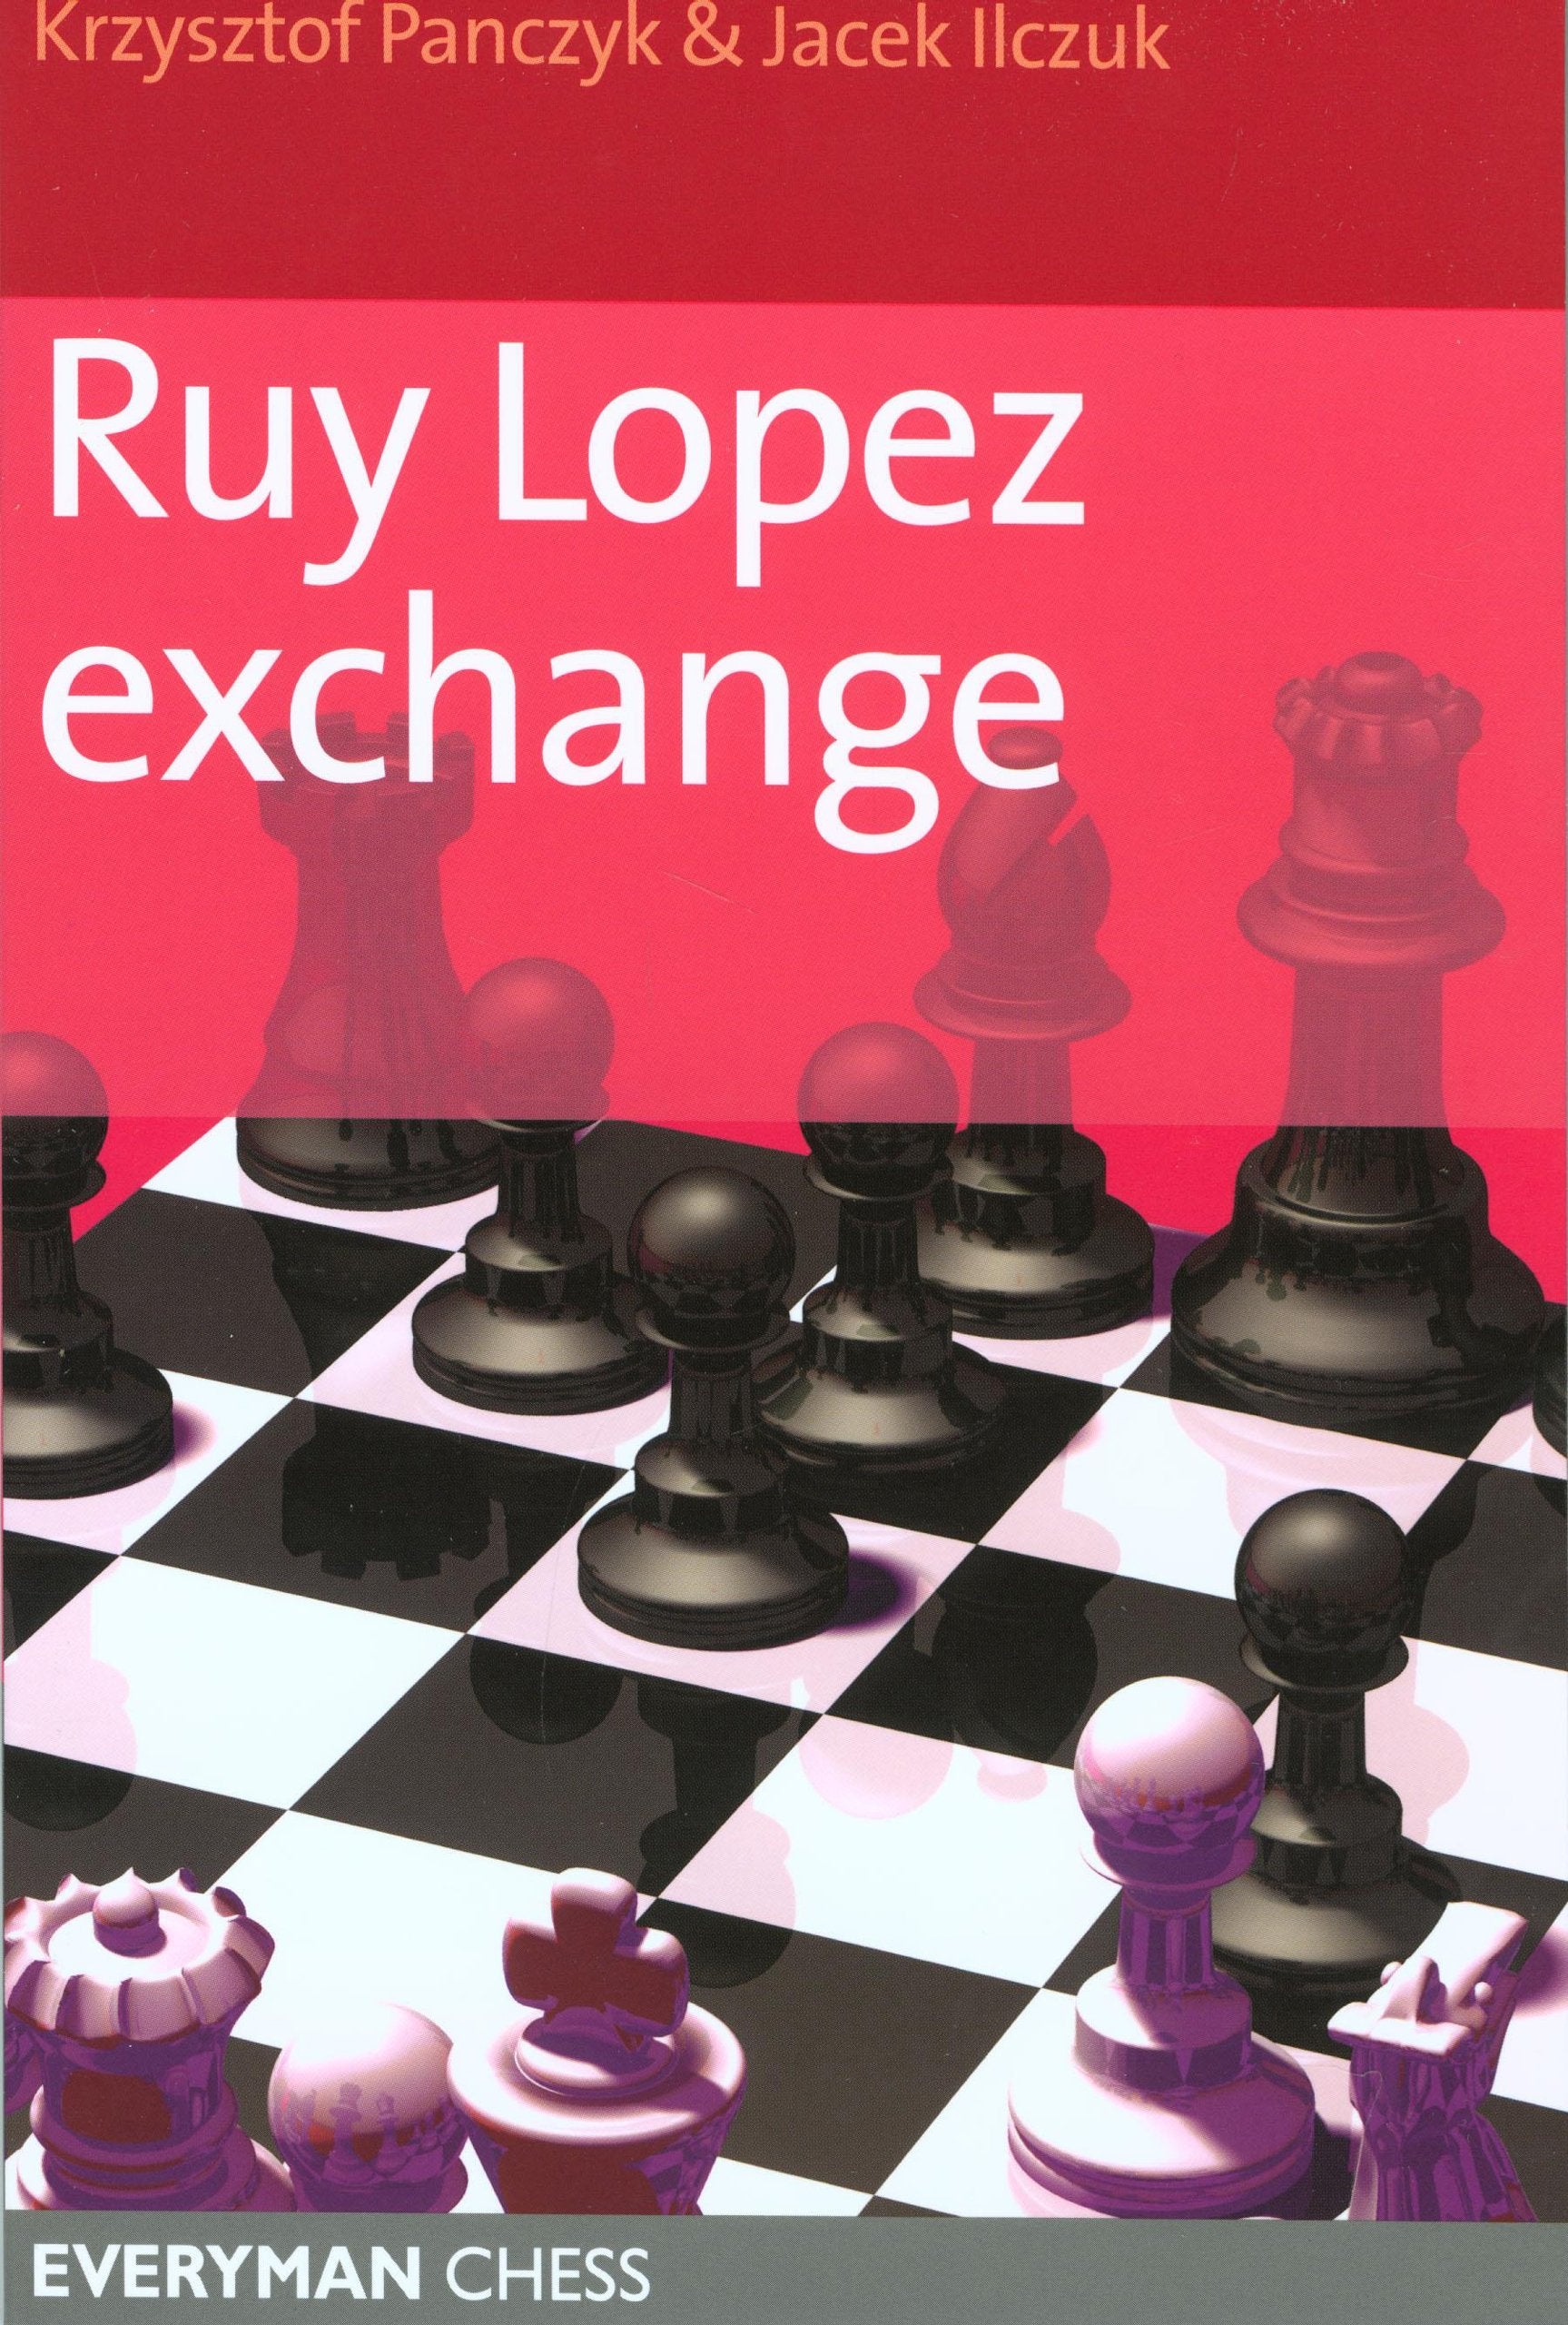 Ruy Lopez: Exchange Variations:Moves 